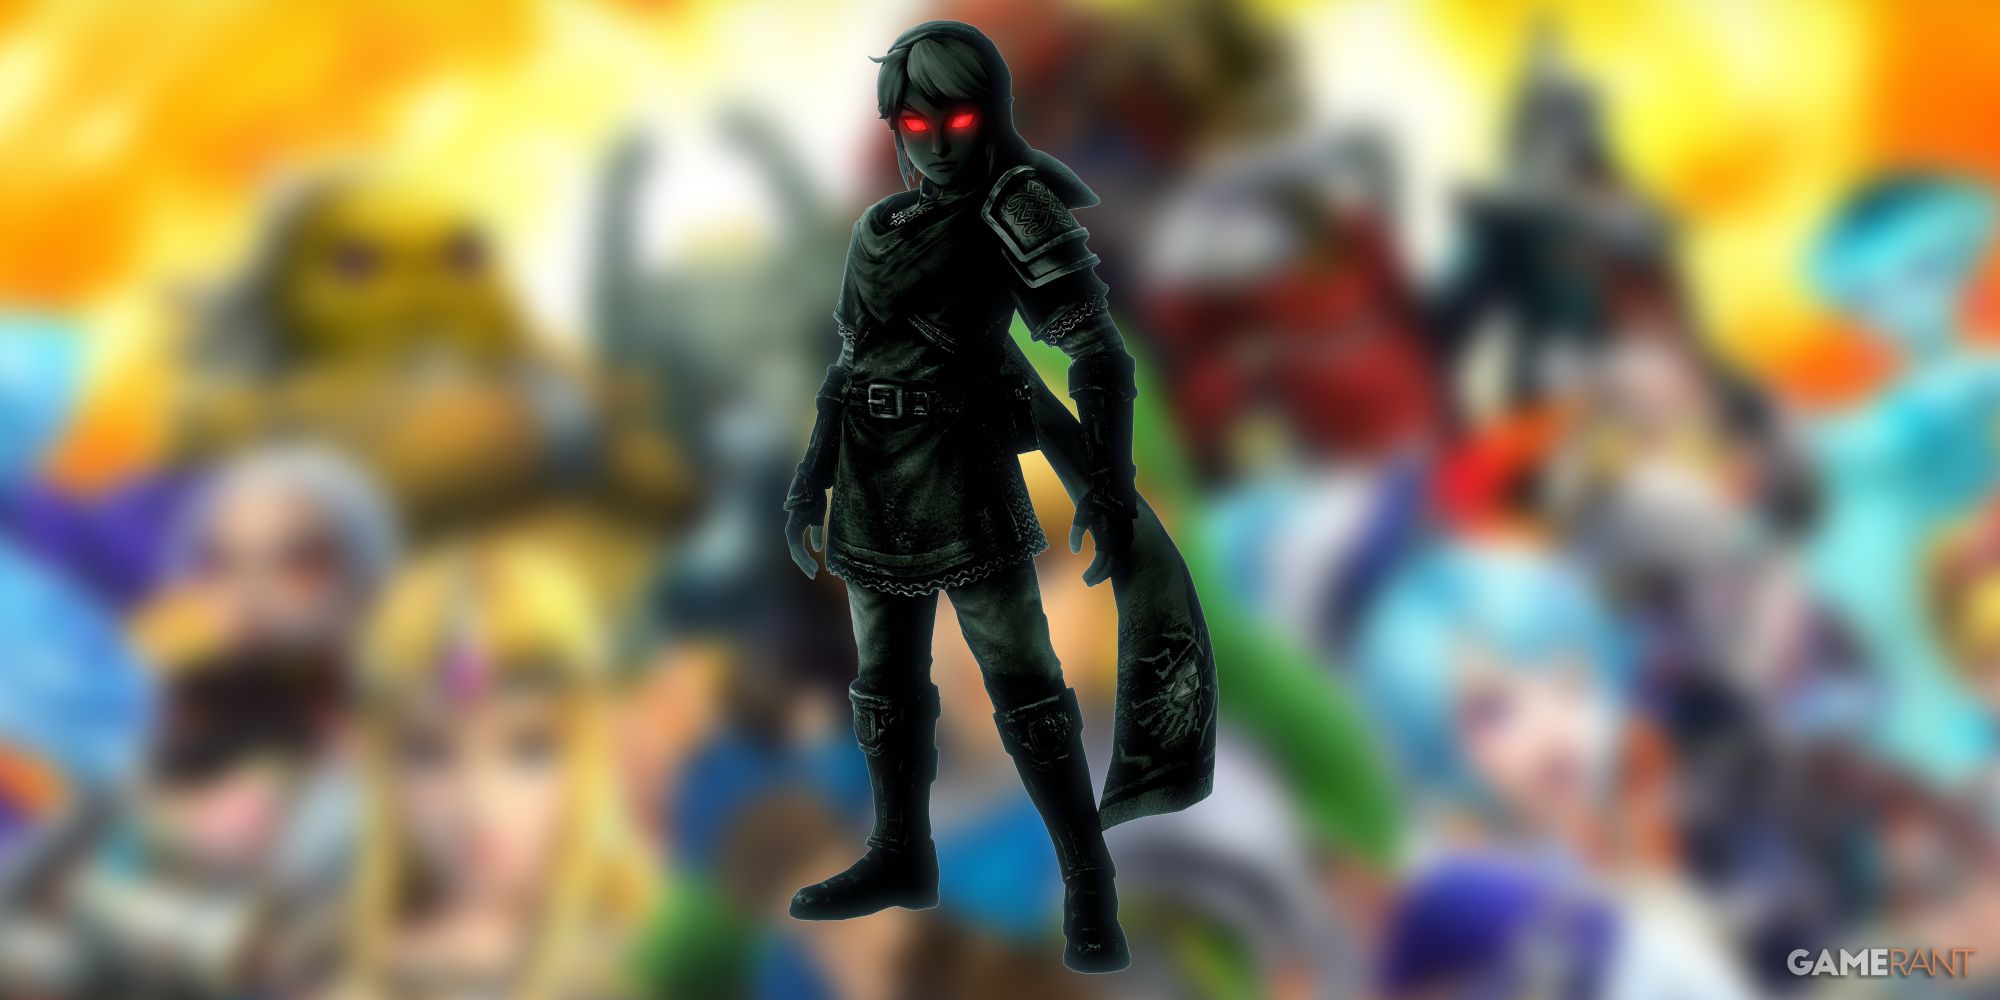 Dark Link DLC costume in Hyrule Warriors